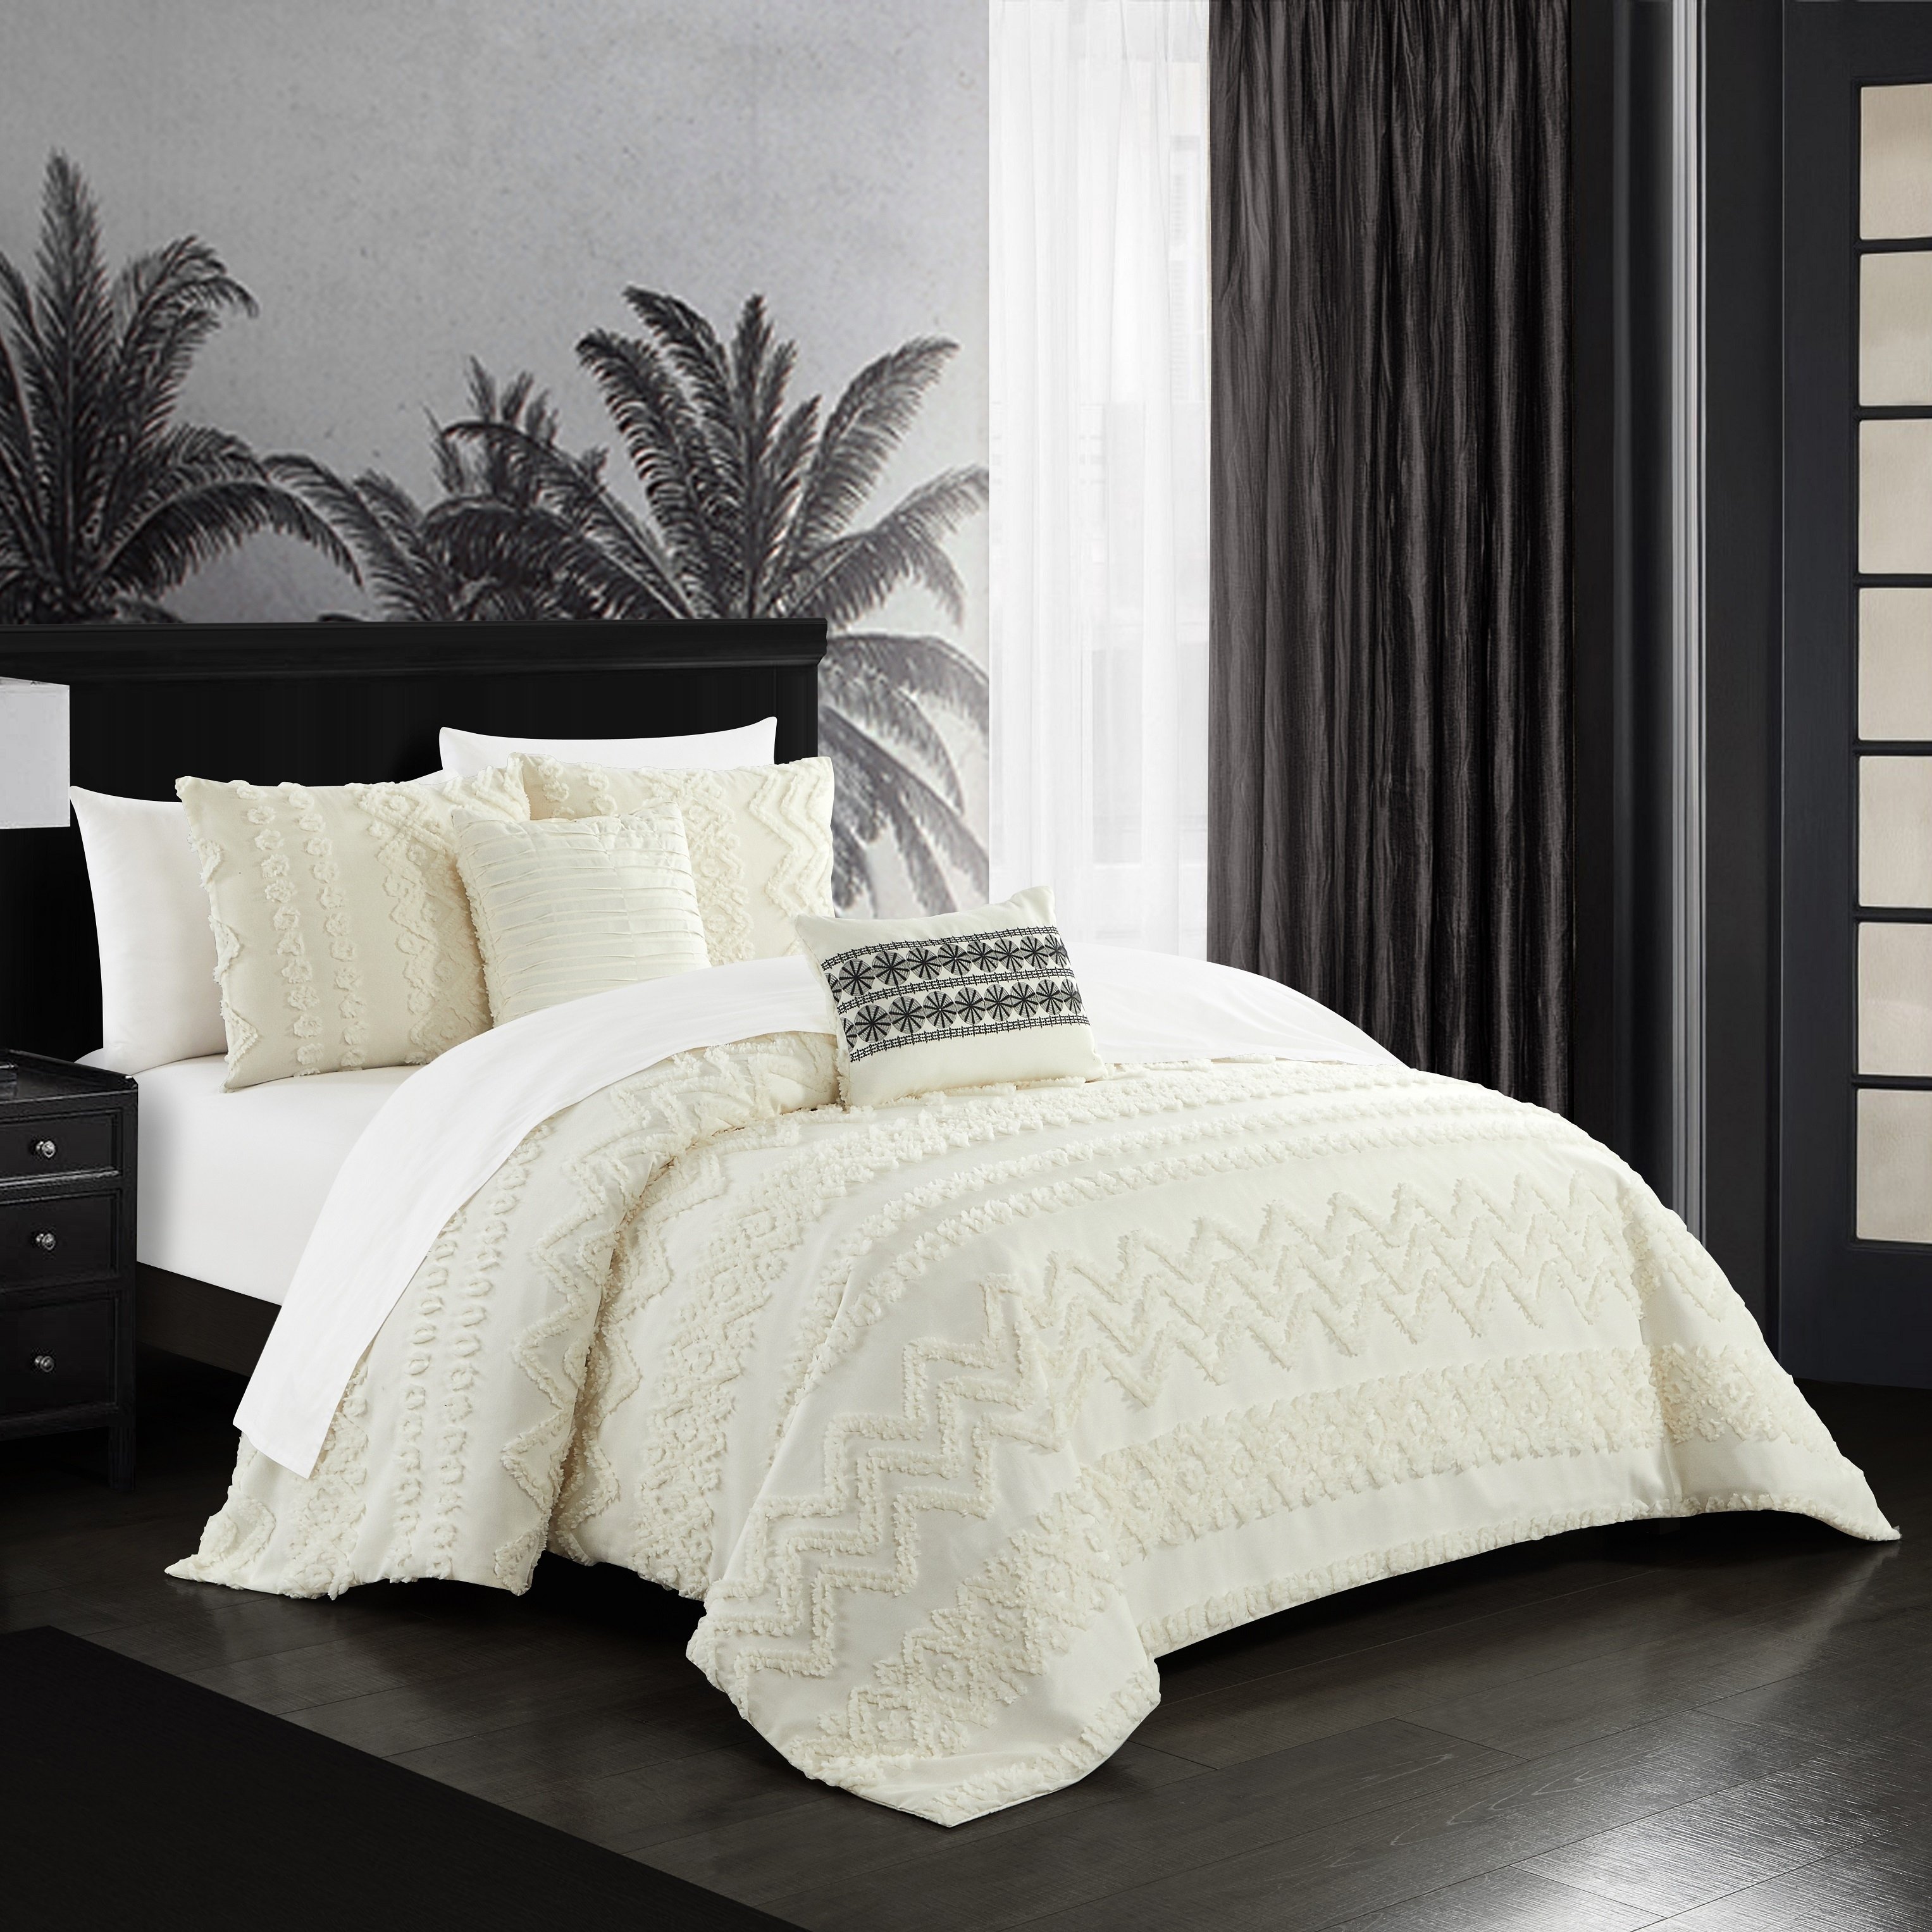 Jenson 5 Piece Comforter Set Jacquard Chevron Geometric Pattern Design Bedding - Beige, King